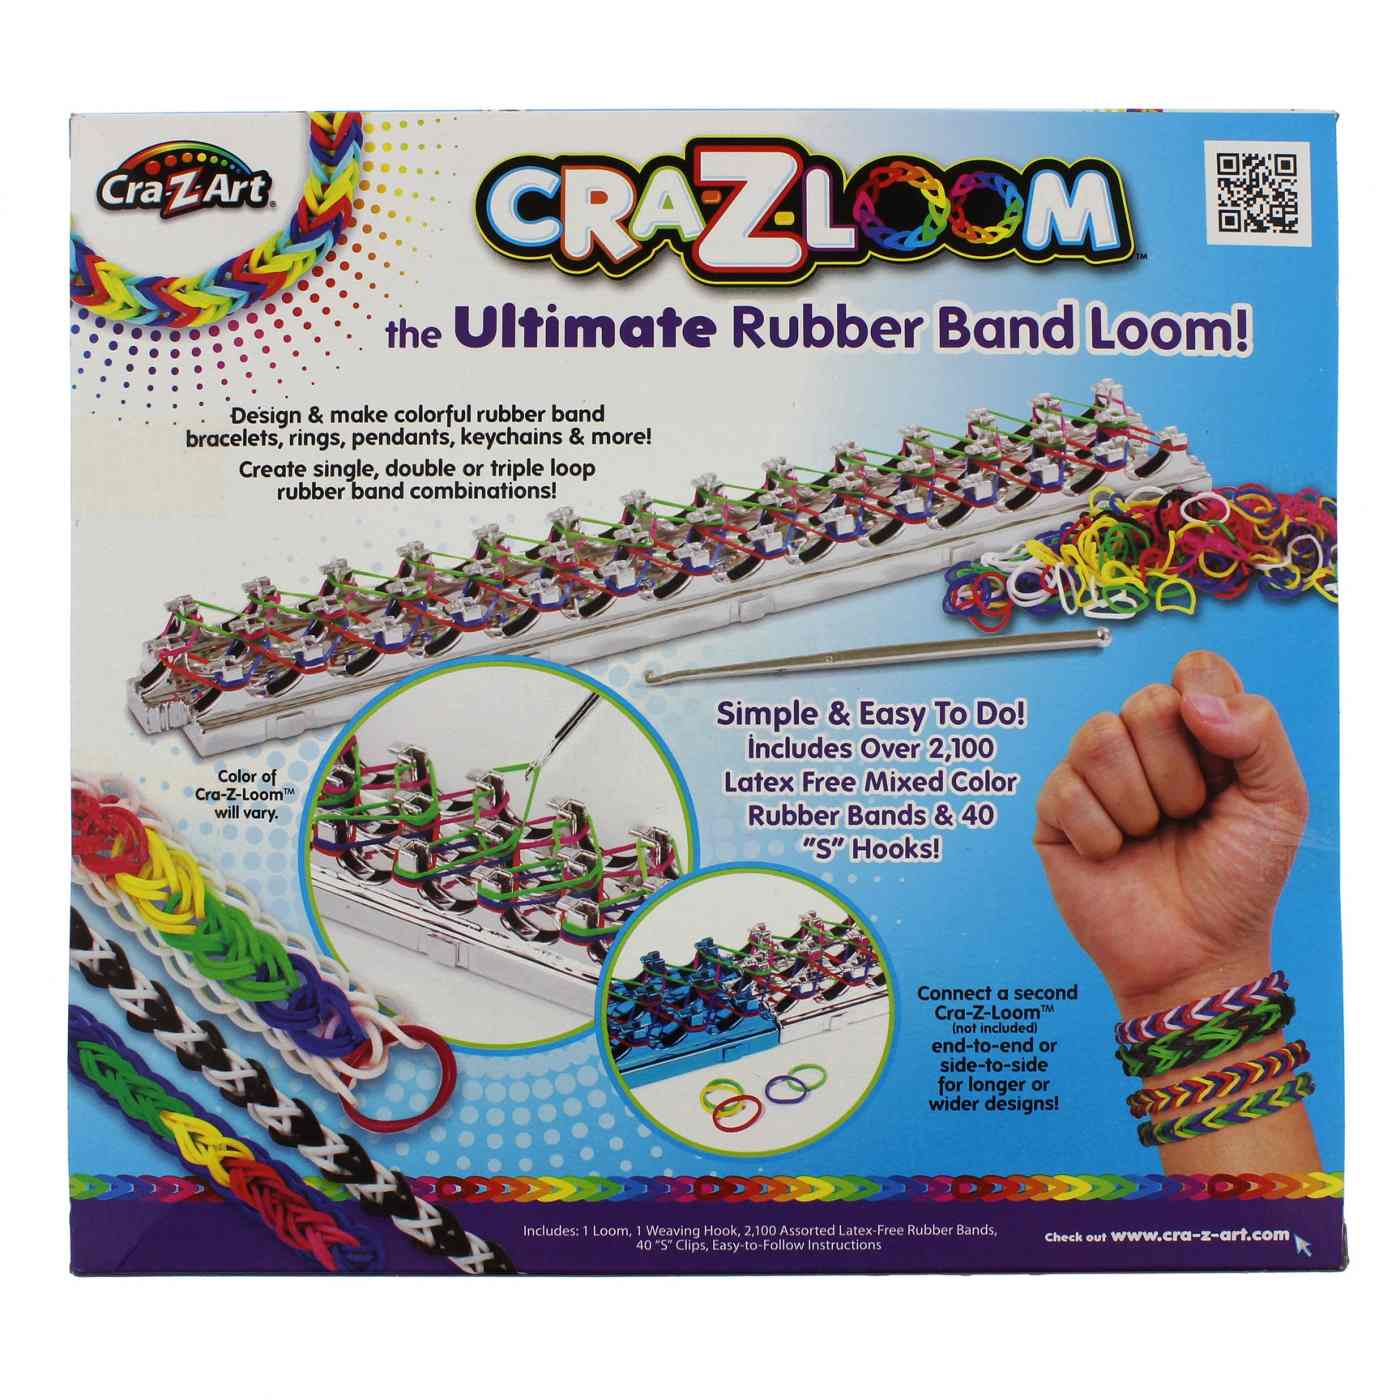 Loom Rubber Band Bracelets Instructions